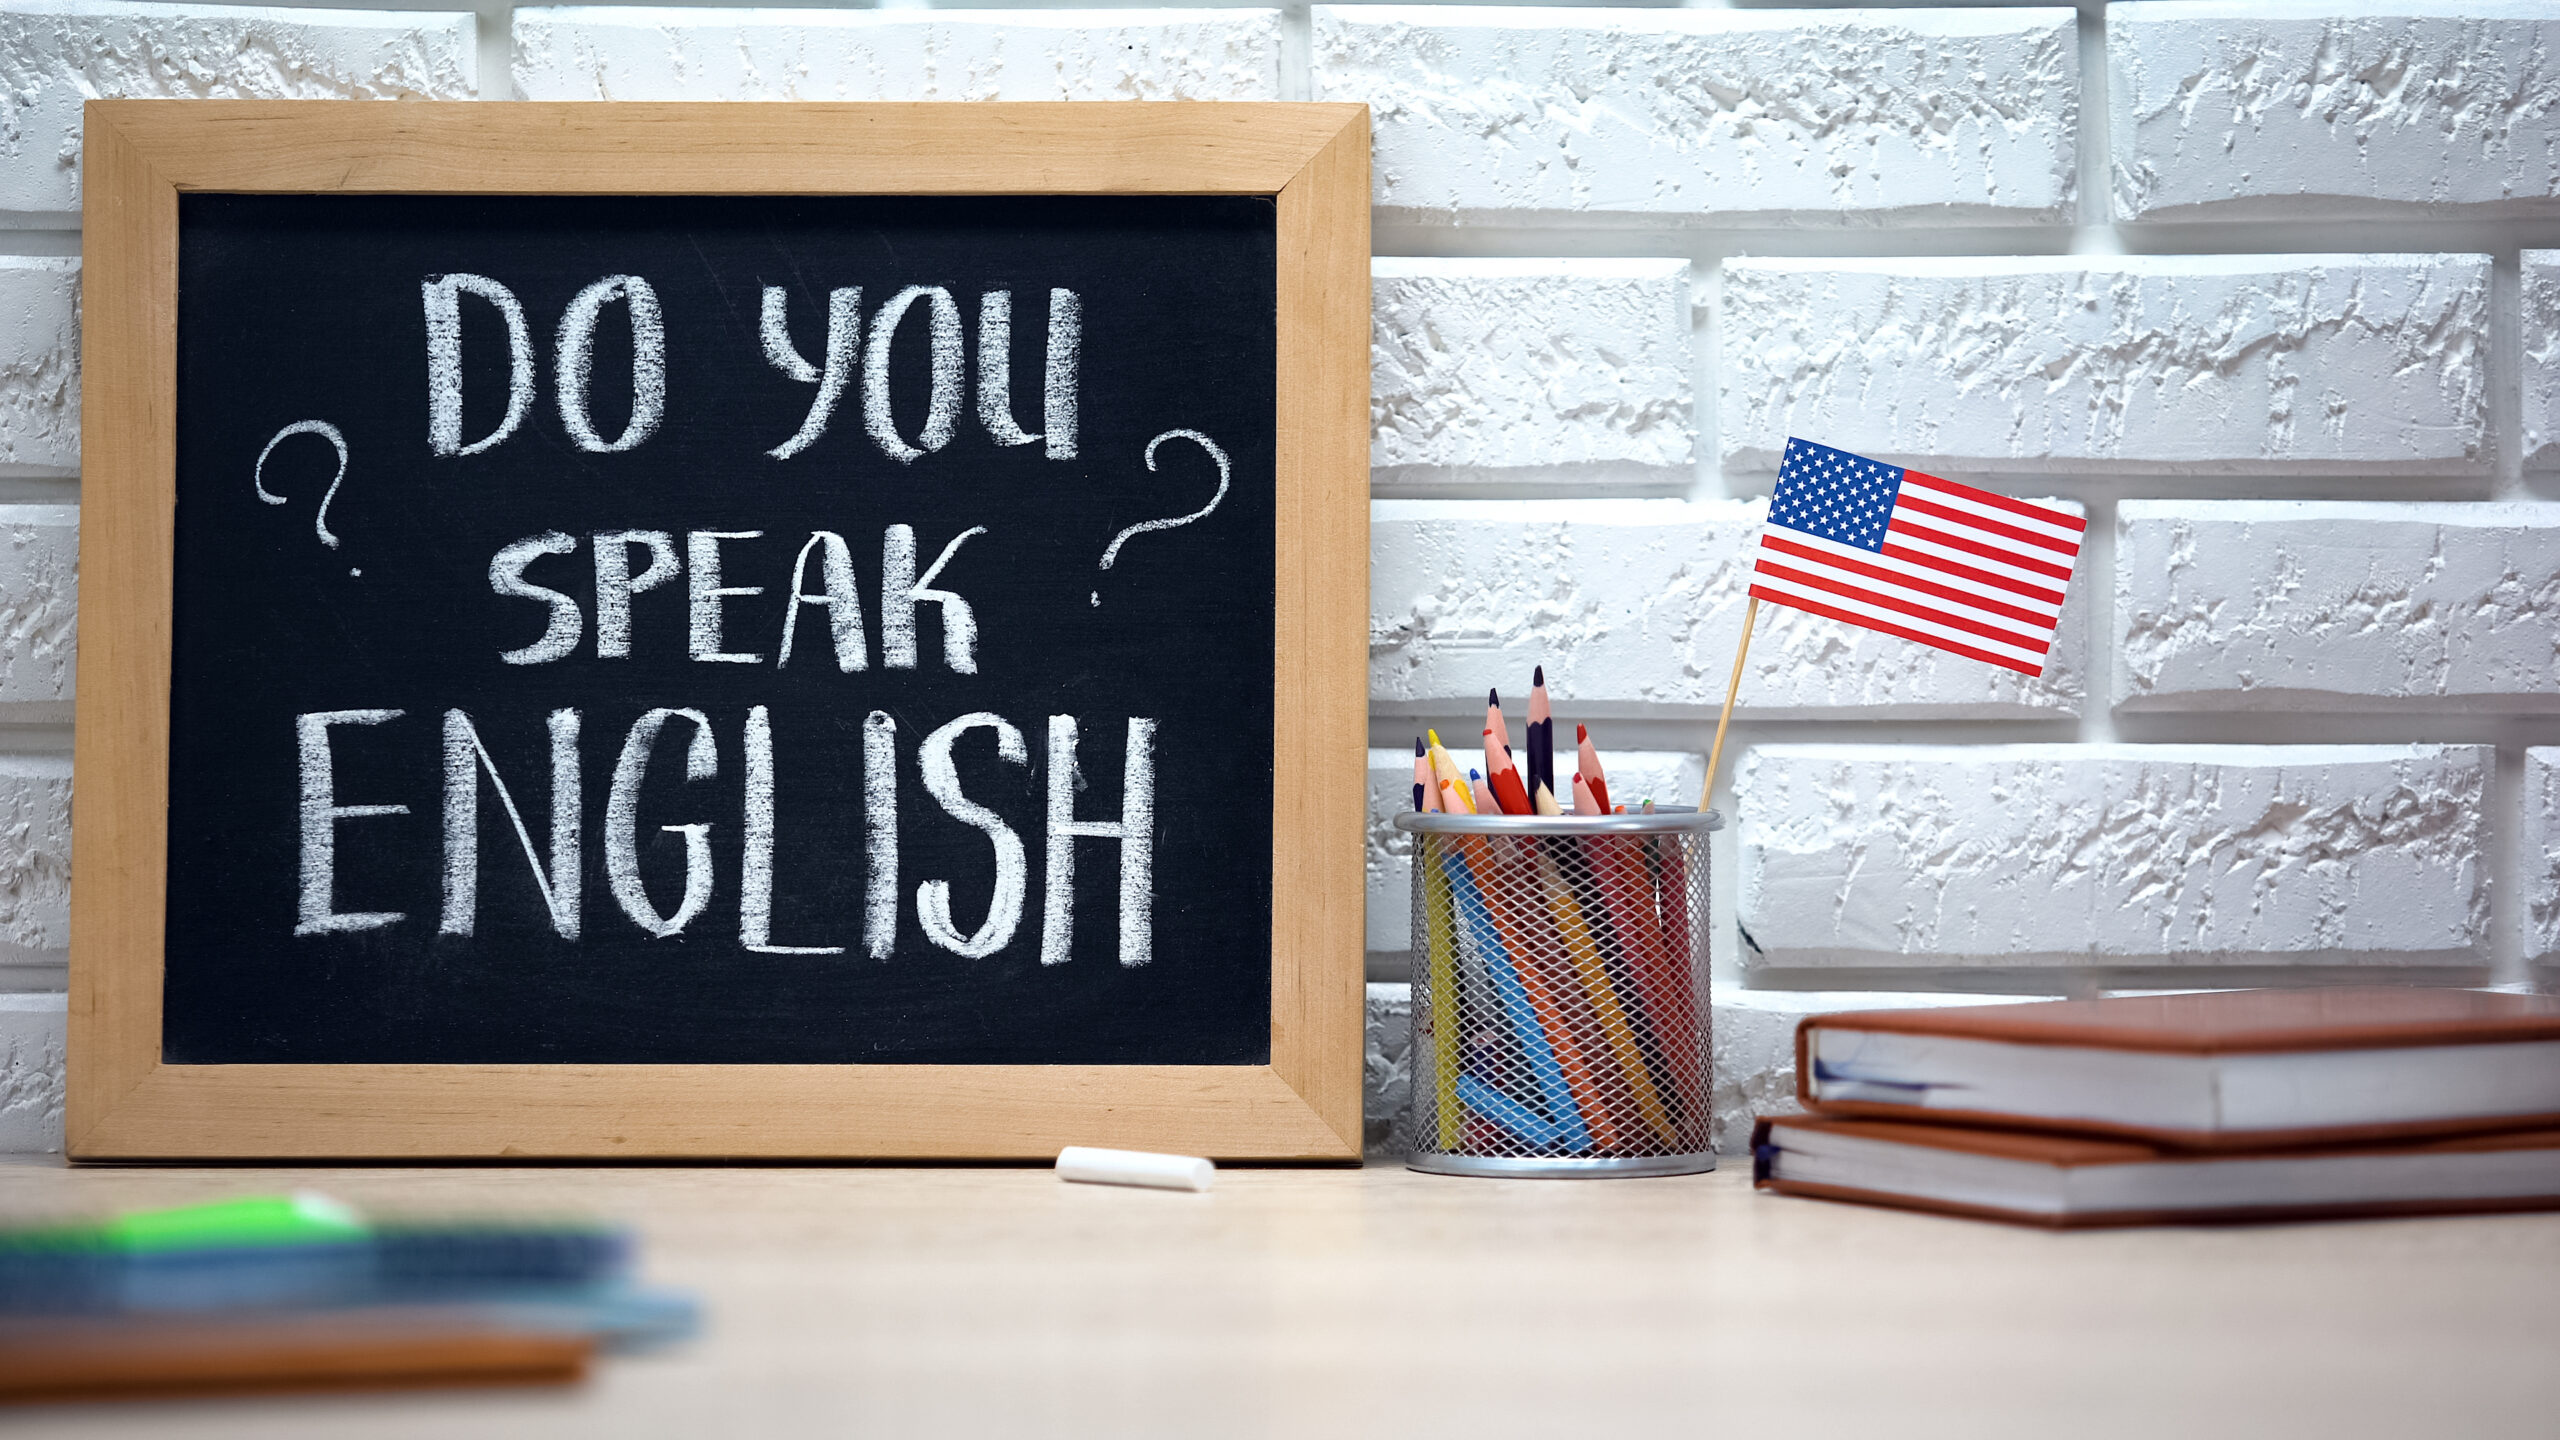 Do you speak english well. Do you speak English картинки. Плакат do you speak English. Speak English по английскому. Do you speak English на доске.